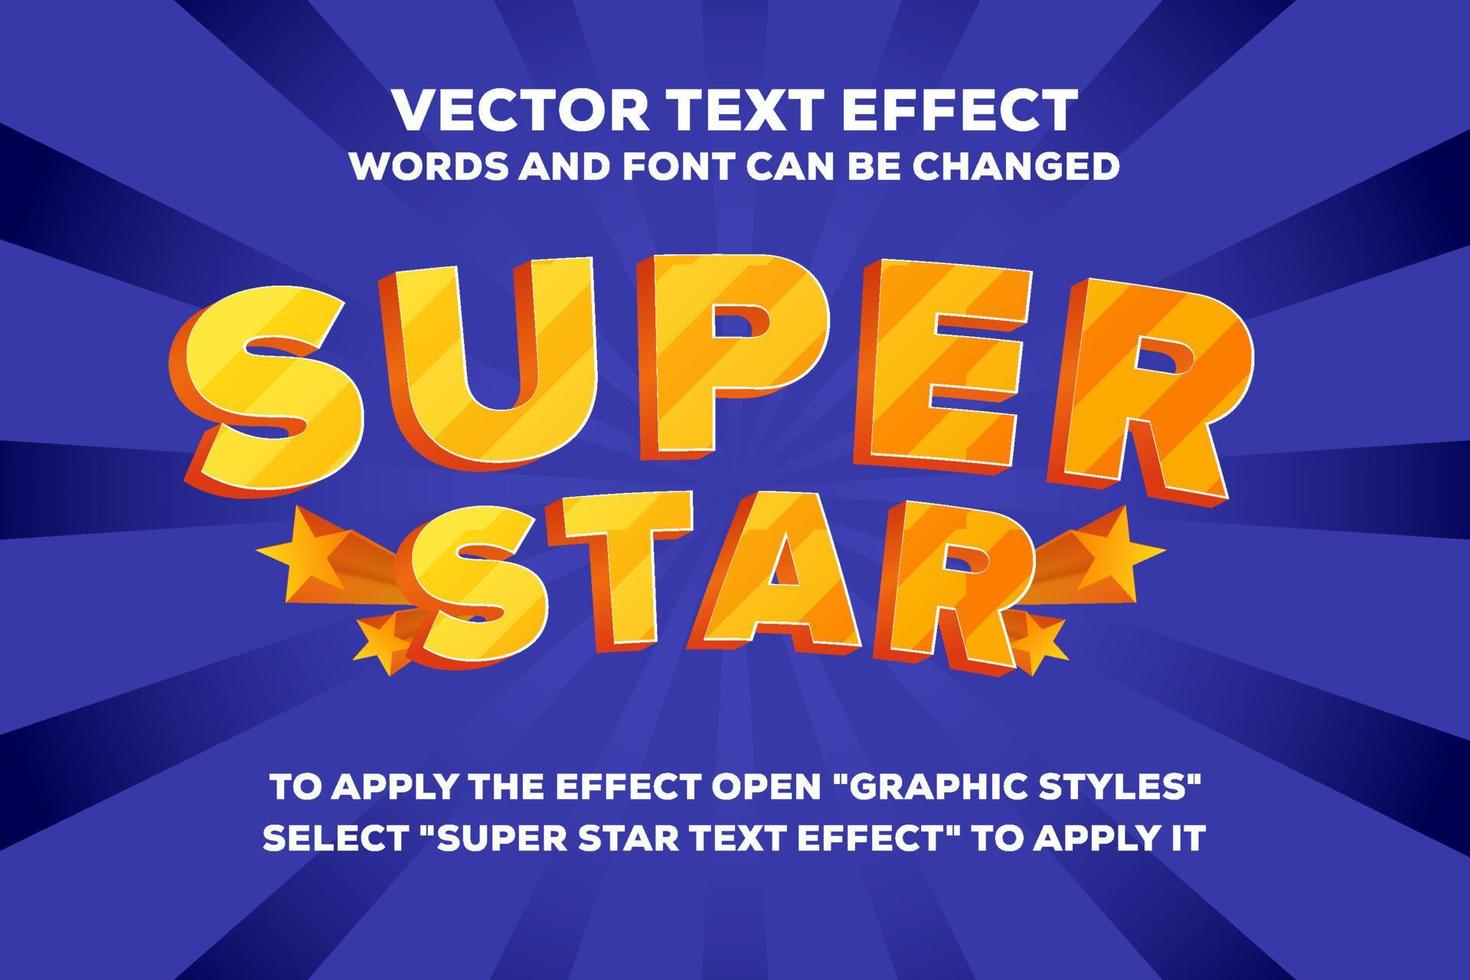 super star vector text effect fully editable